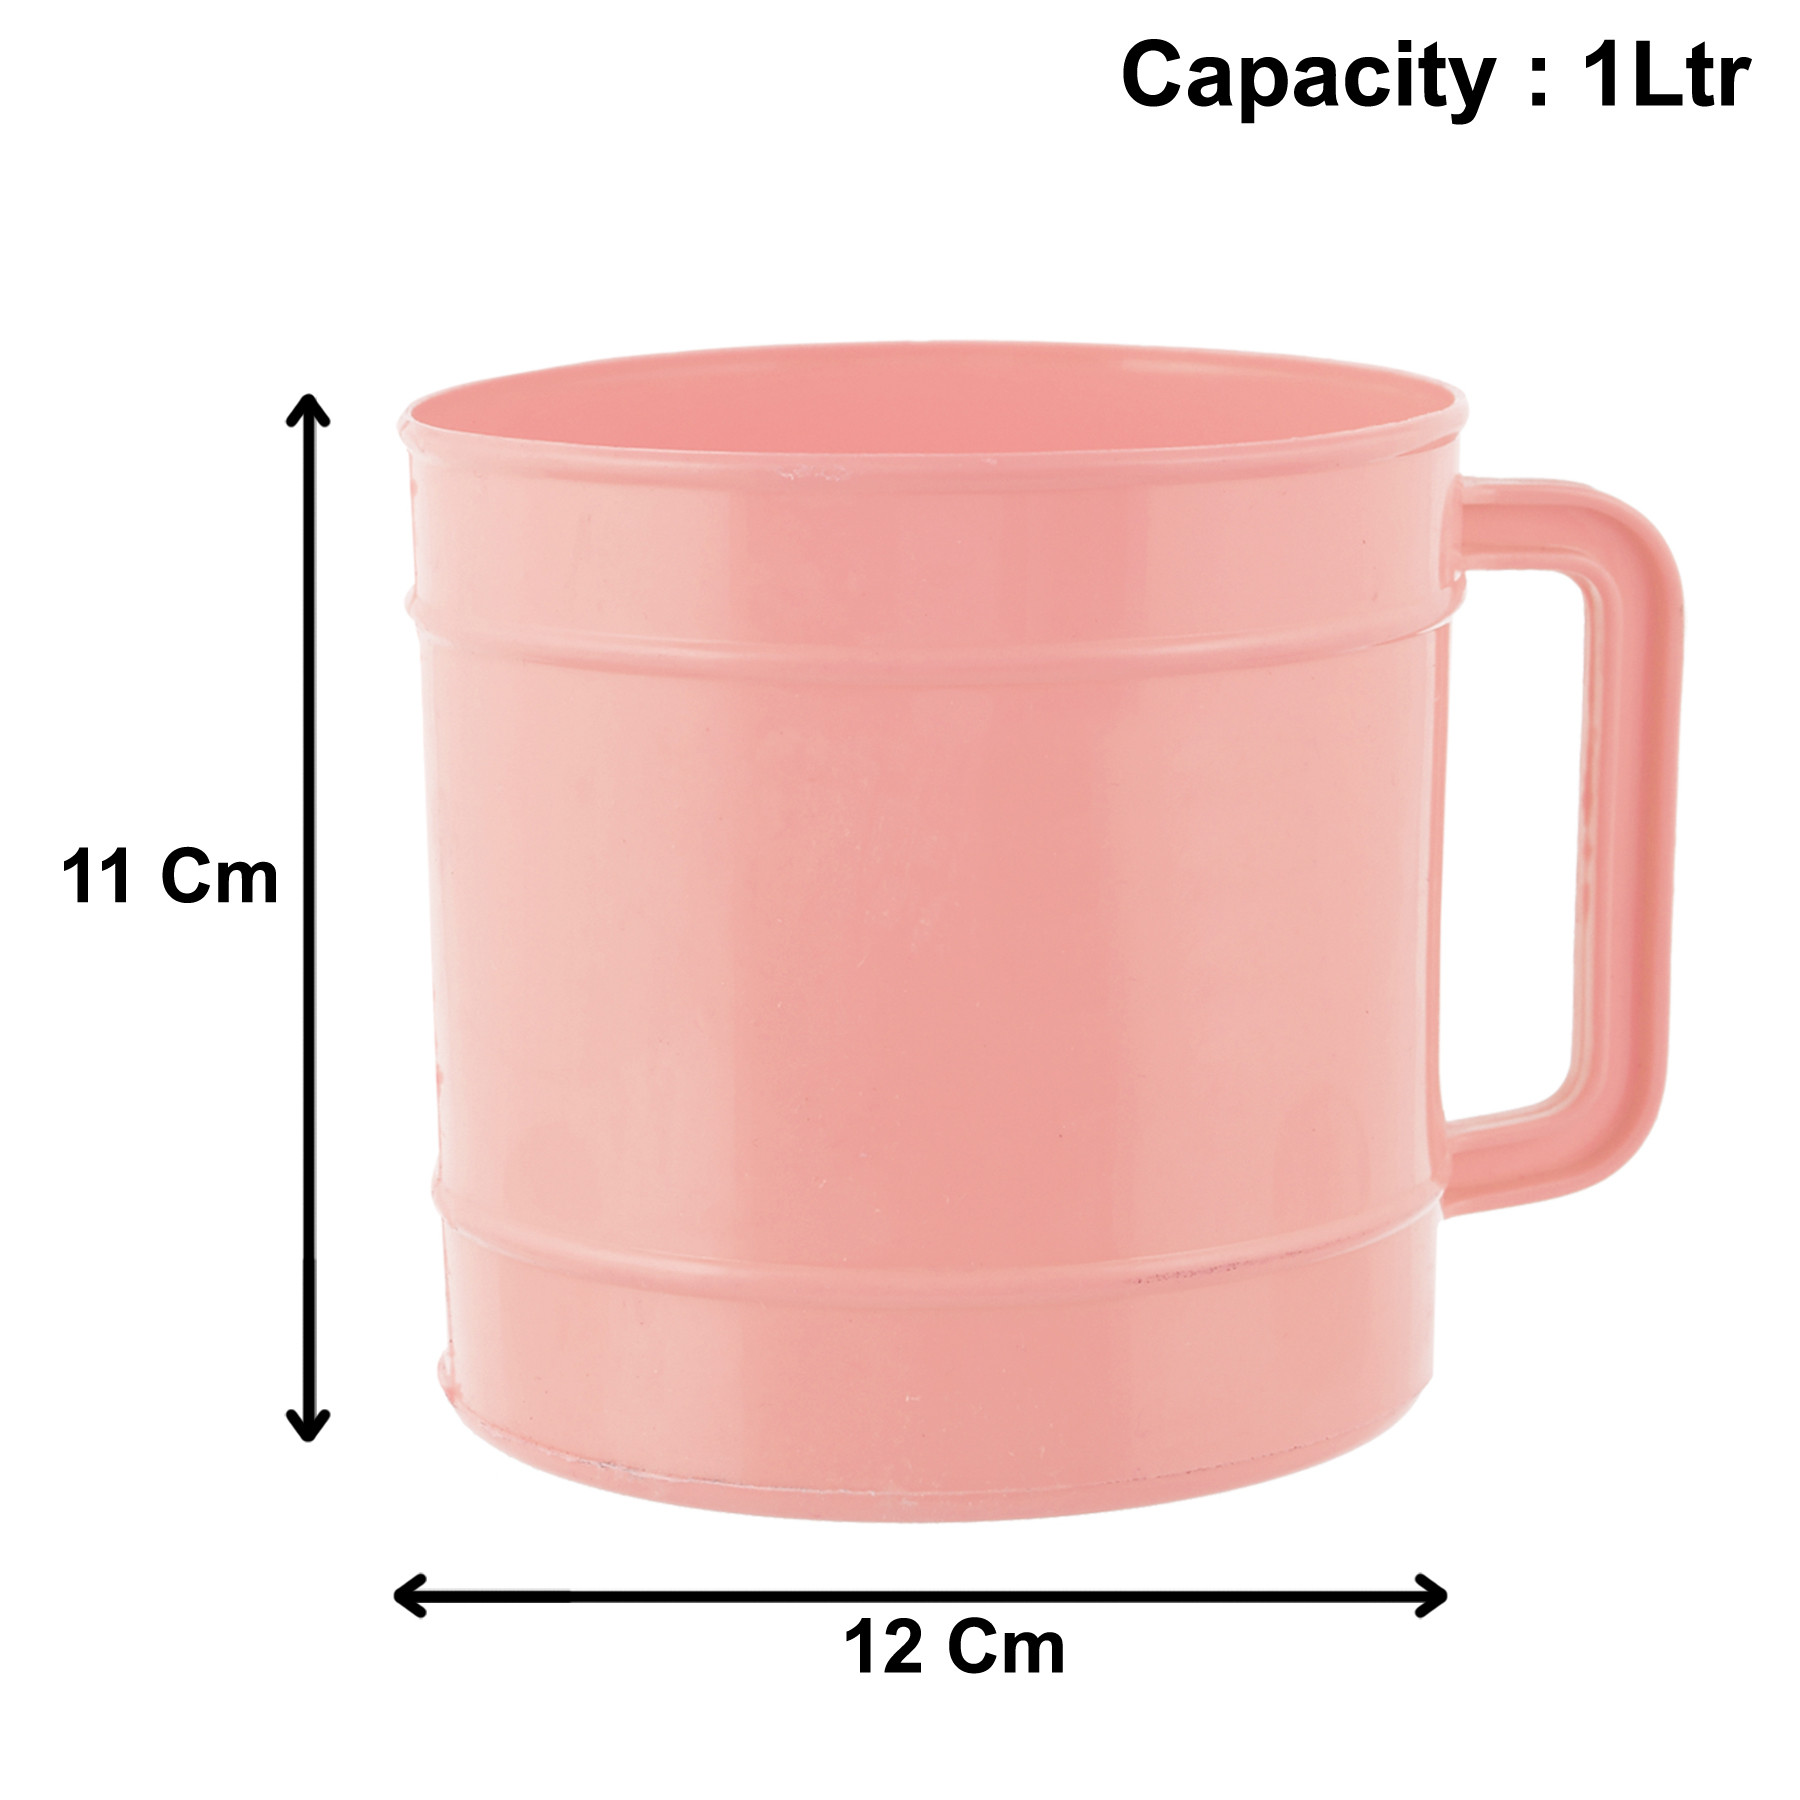 Kuber Industries Plastic Bathroom Mug, 1 Ltr., Pack of 6 (Cream & Pink)